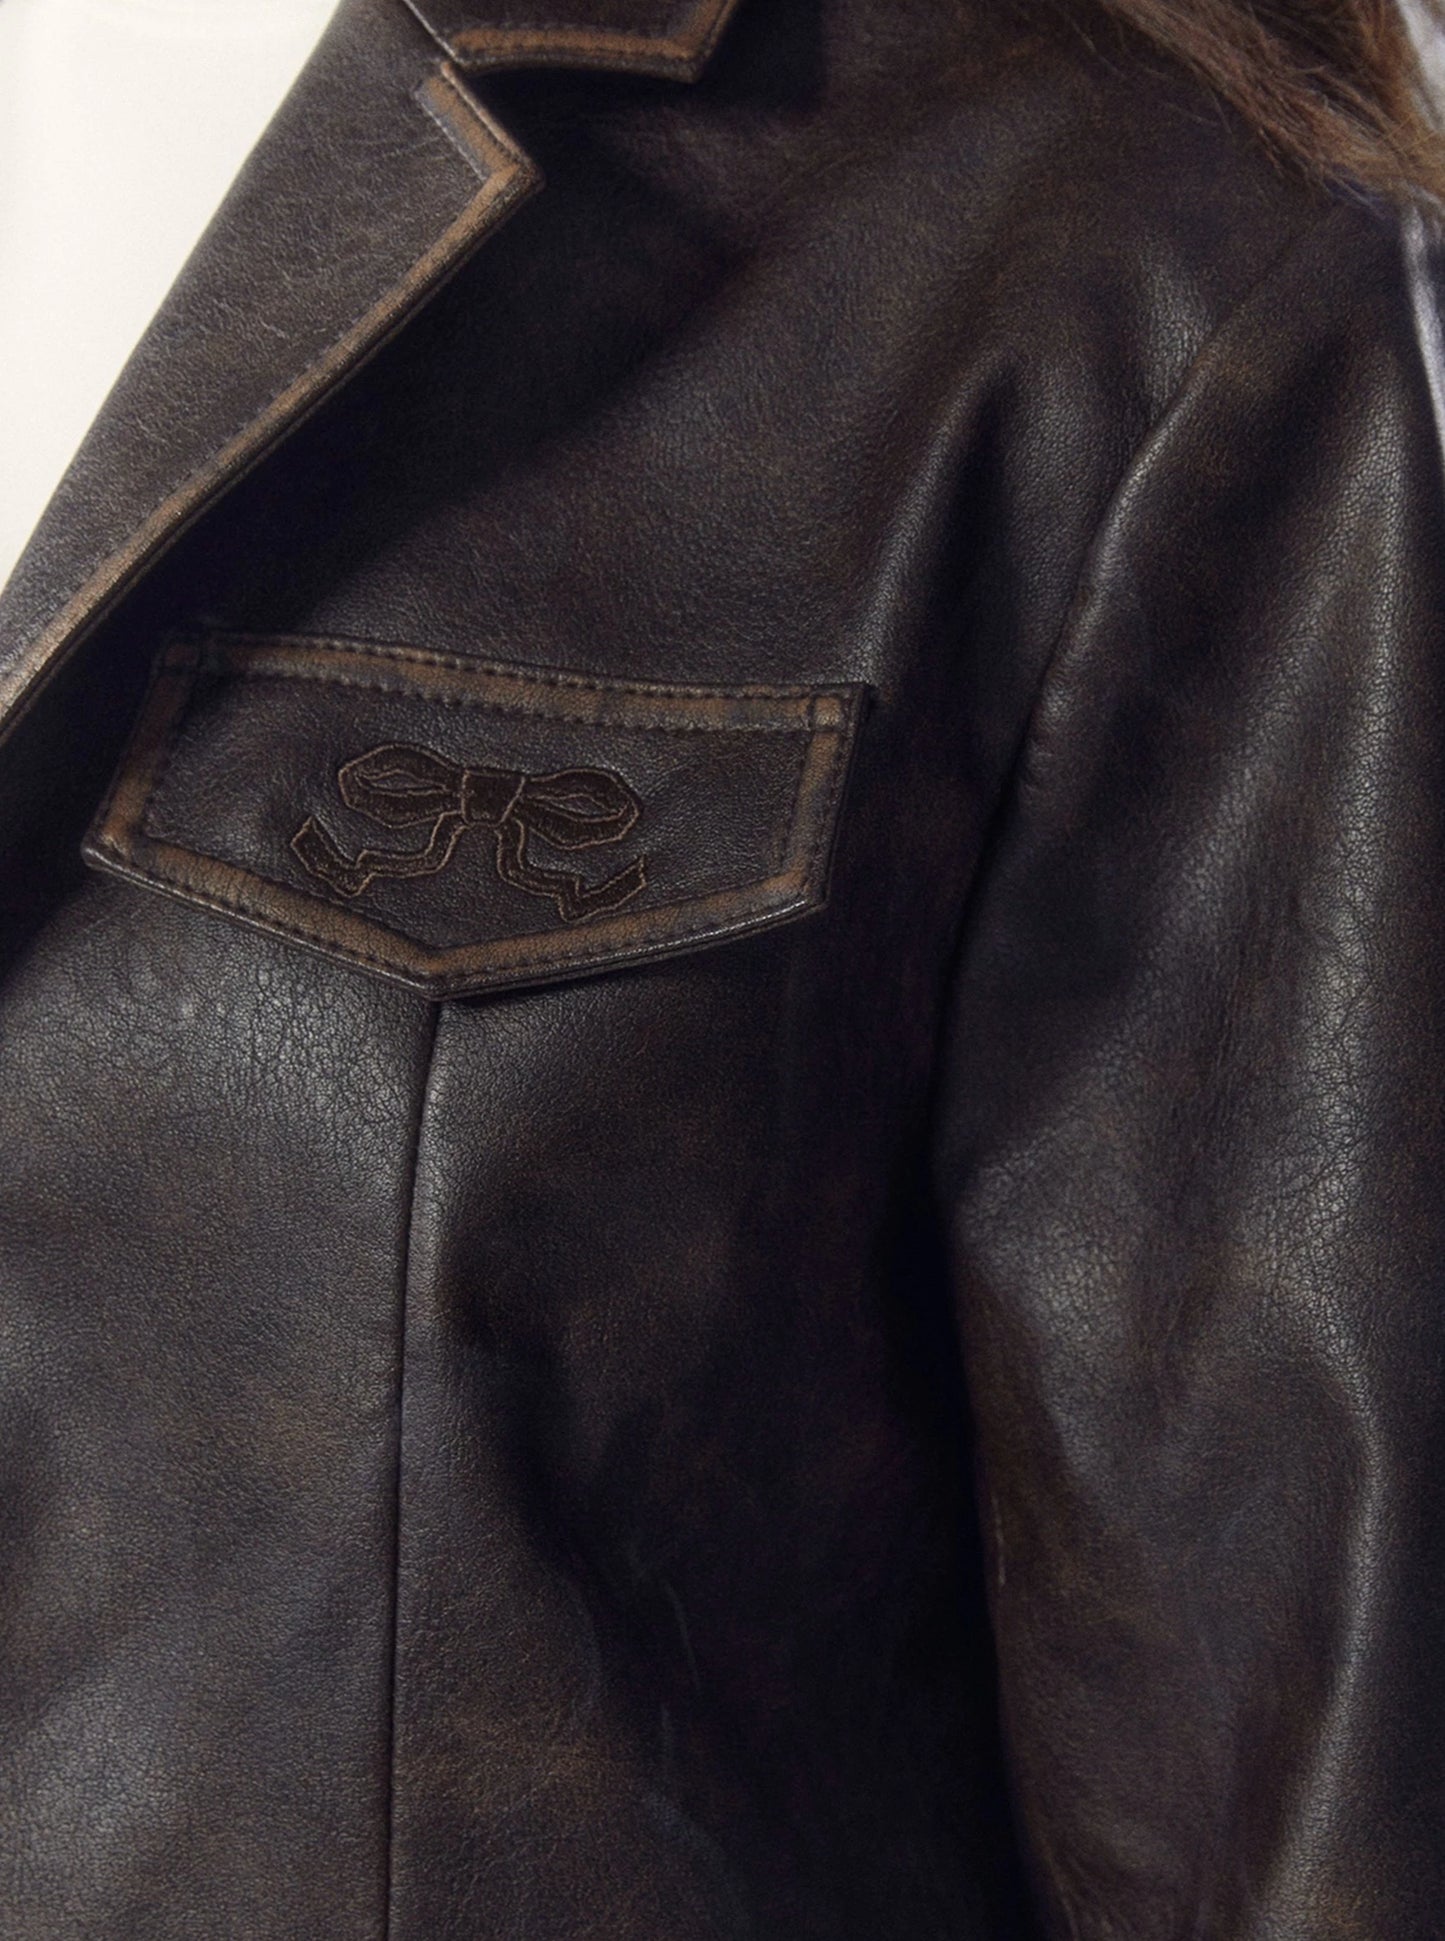 vintage embroidered leather jacket set